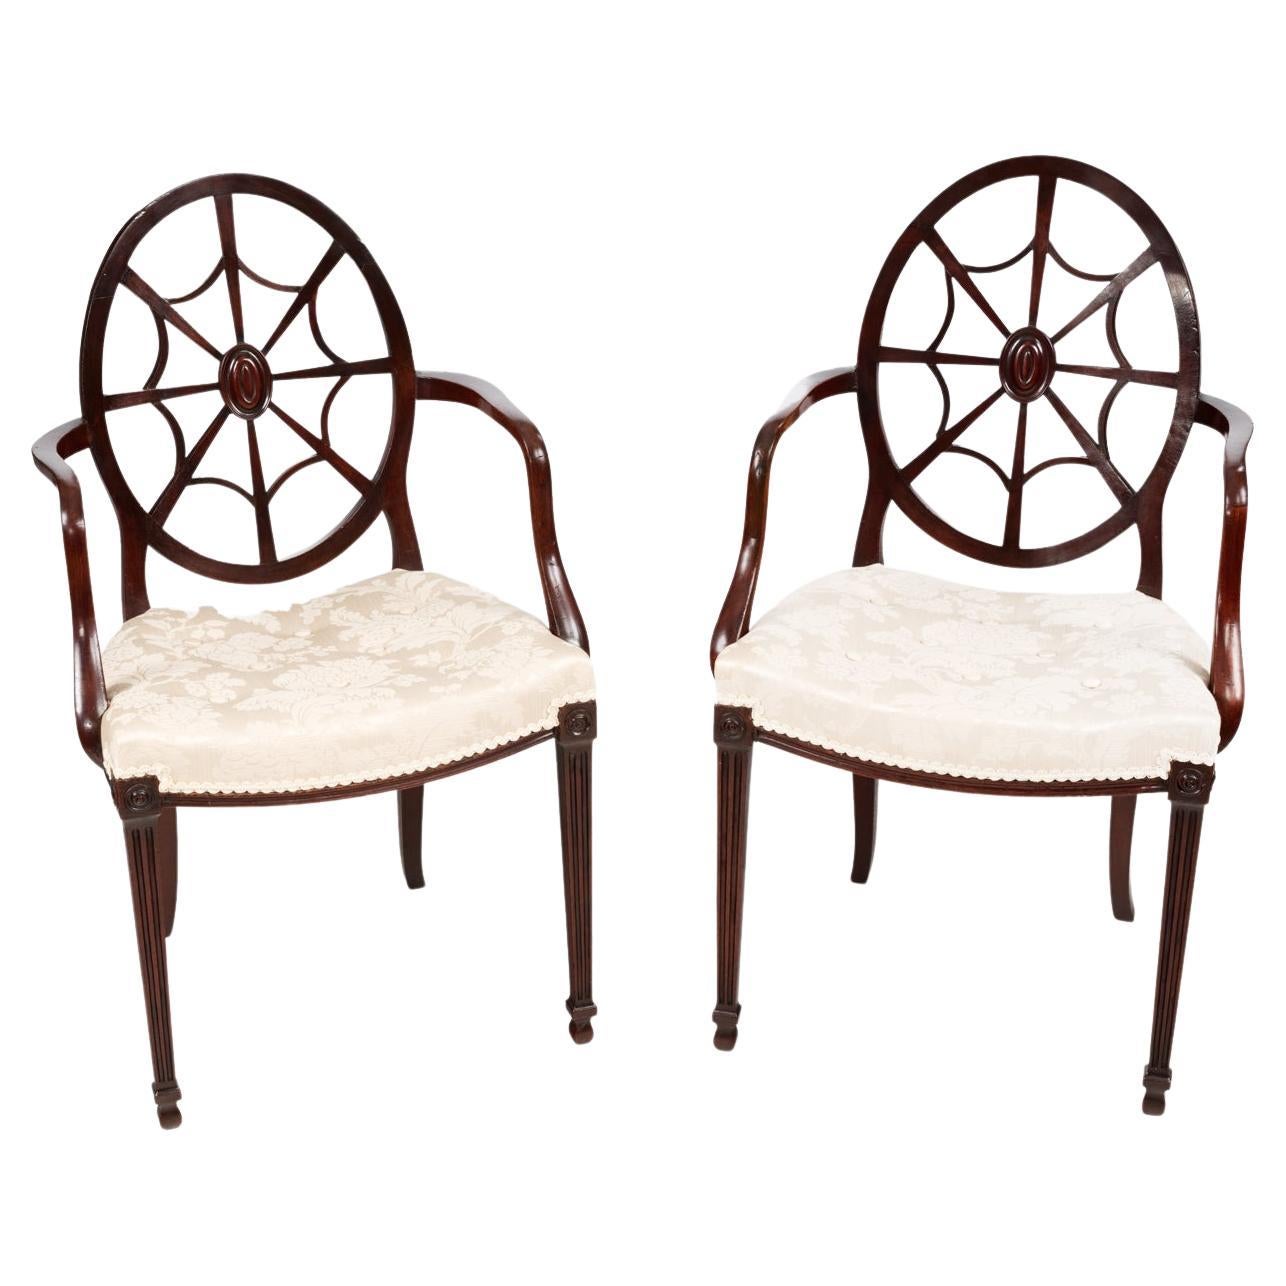 Pair of Hepplewhite Style Wheelback Armchairs